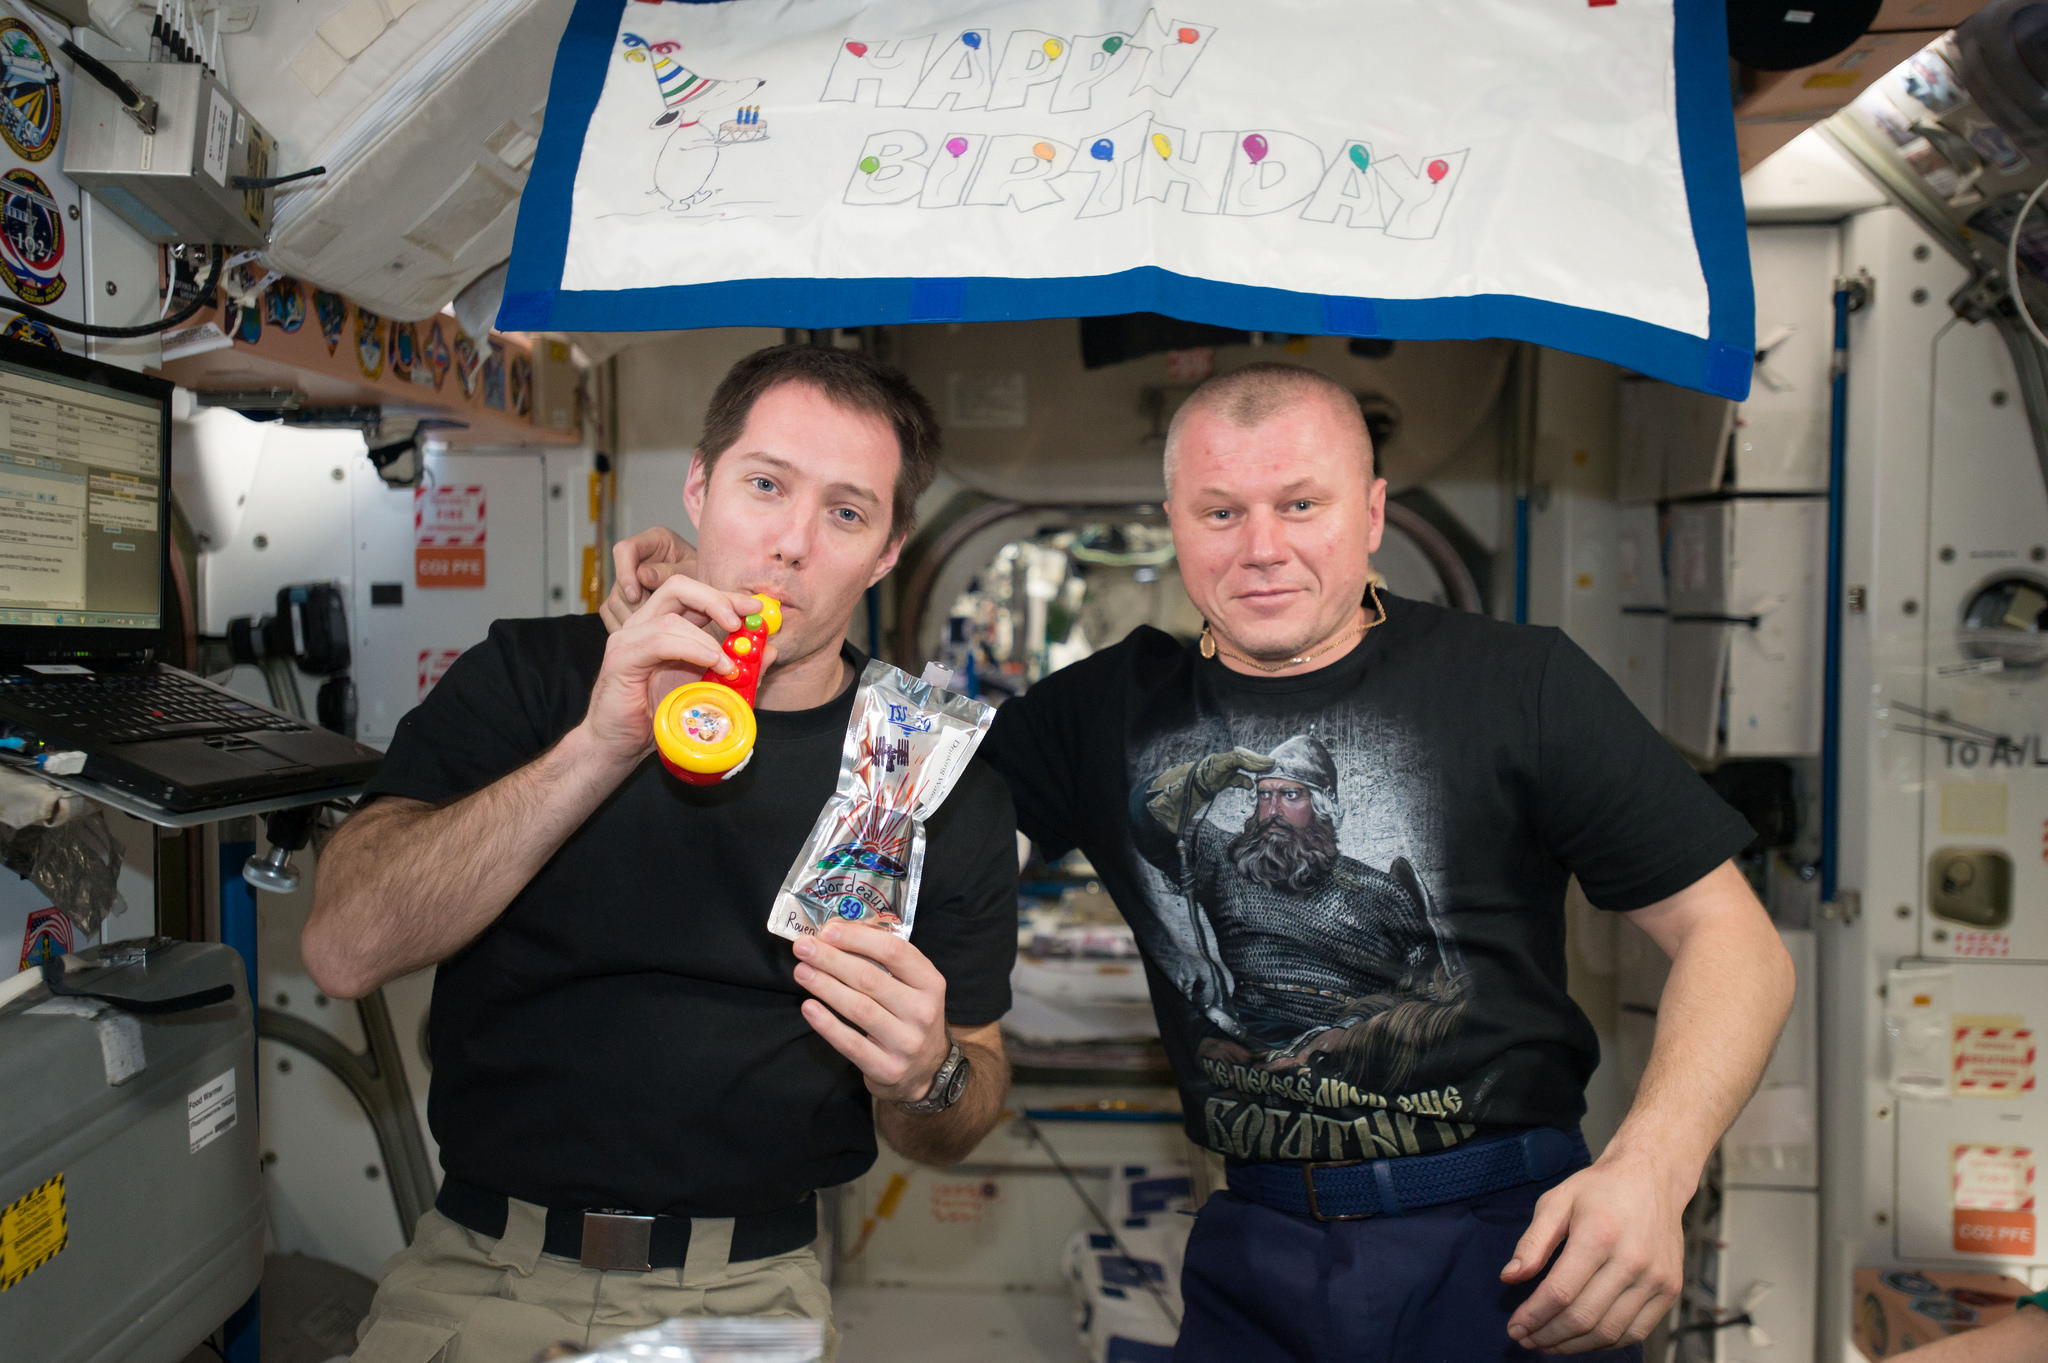 ESA (European Space Agency) astronaut Thomas Pesquet and Russian cosmonaut Oleg Novitskiy celebrate Pesquet's birthday